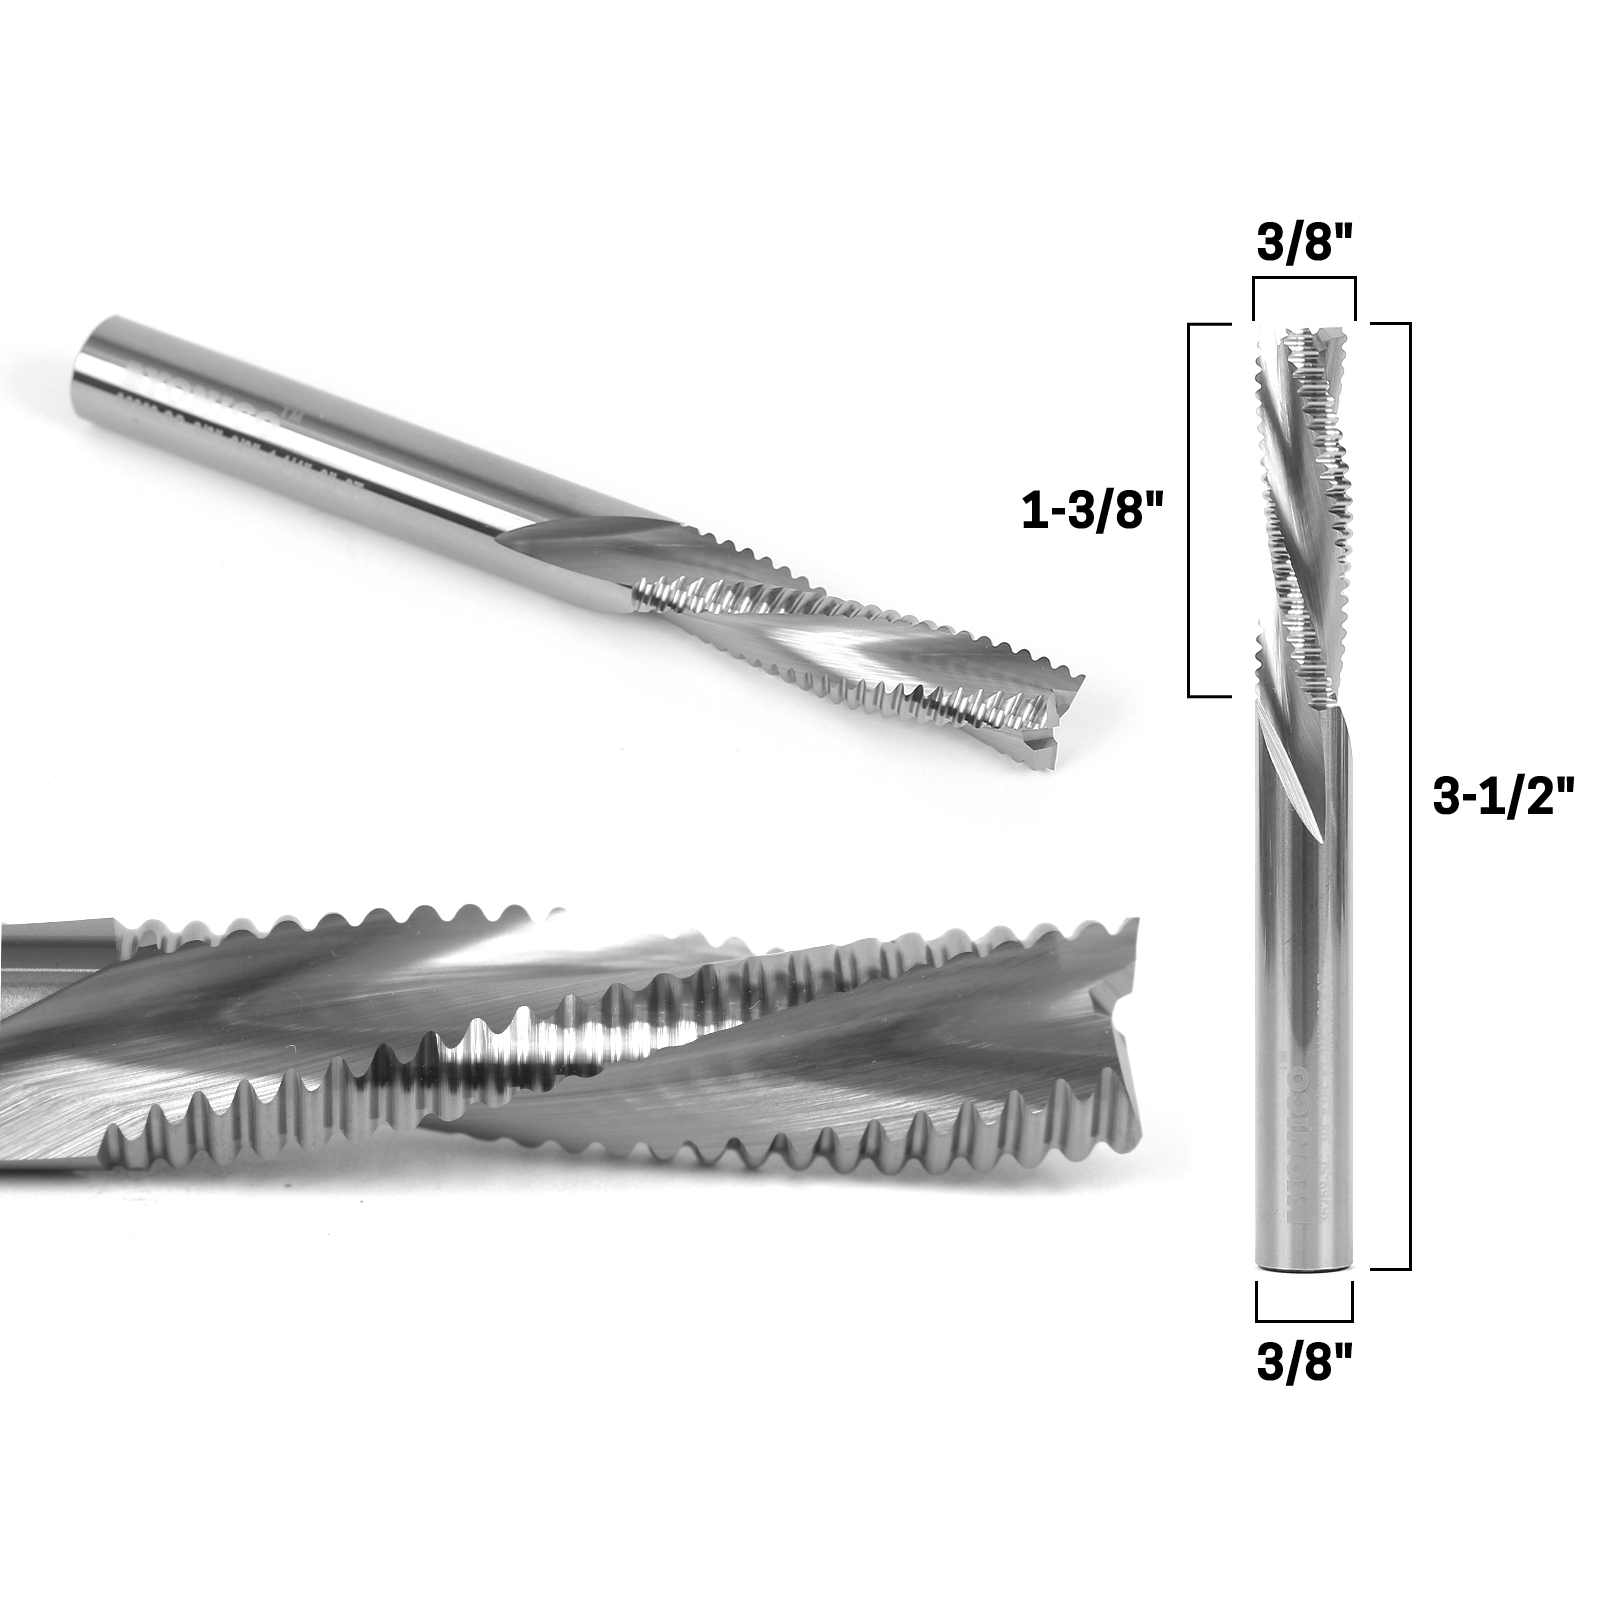 3/8" Diameter Carbide Down Cut CNC Router Bit x 1-1/8" Cut 2 Flute USA Made G19 